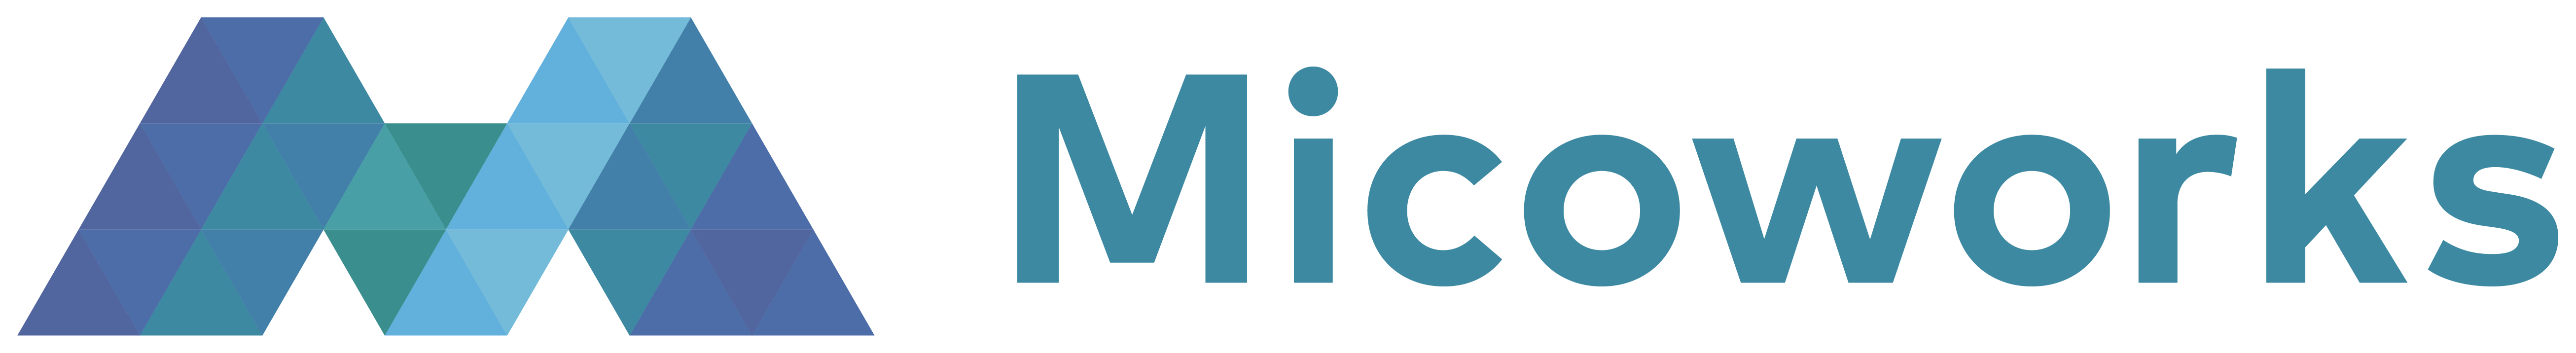 Micoworks株式会社logo